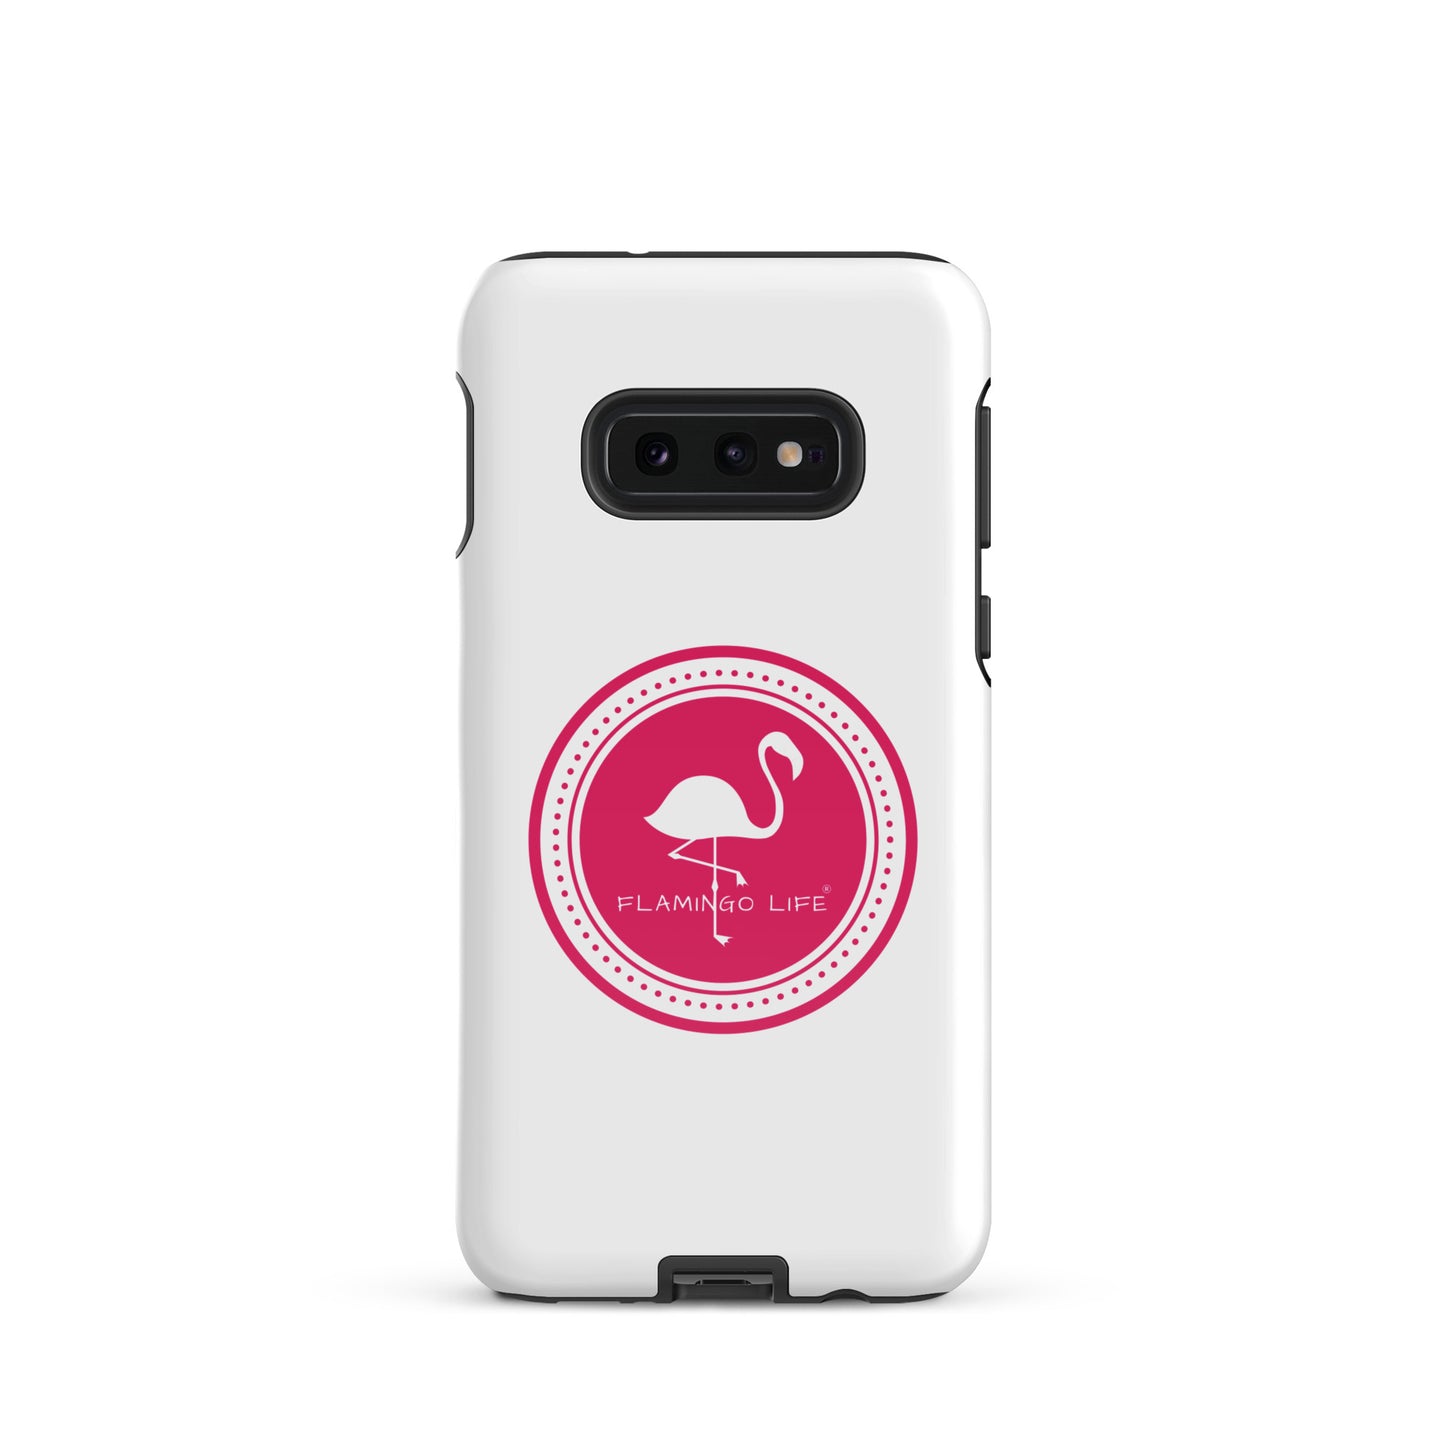 Flamingo Life® Tough case for Samsung®